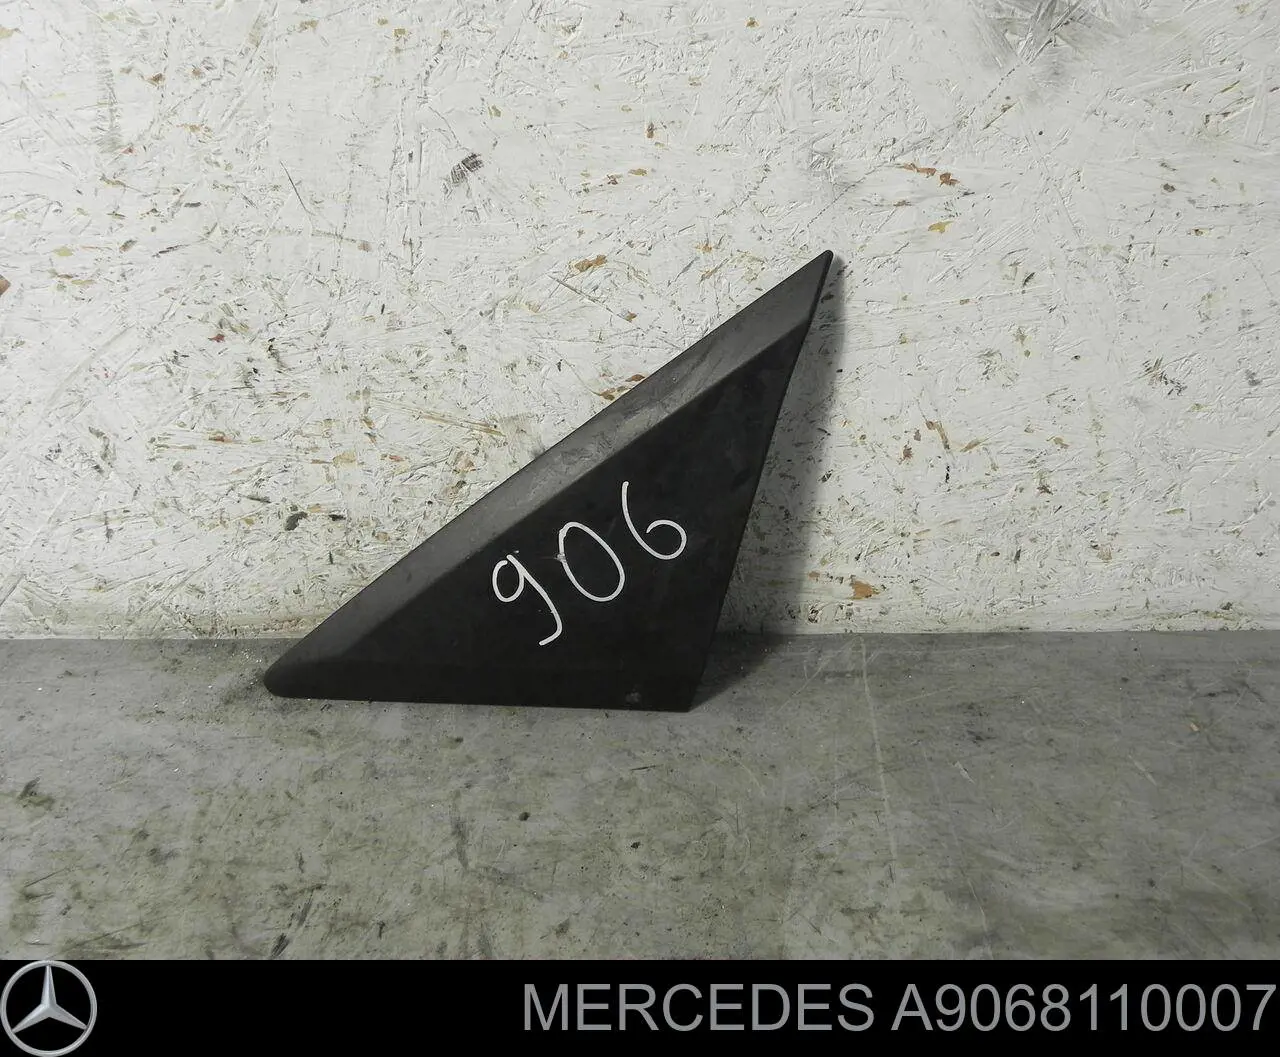 9068110007 Mercedes cubierta de espejo retrovisor izquierdo